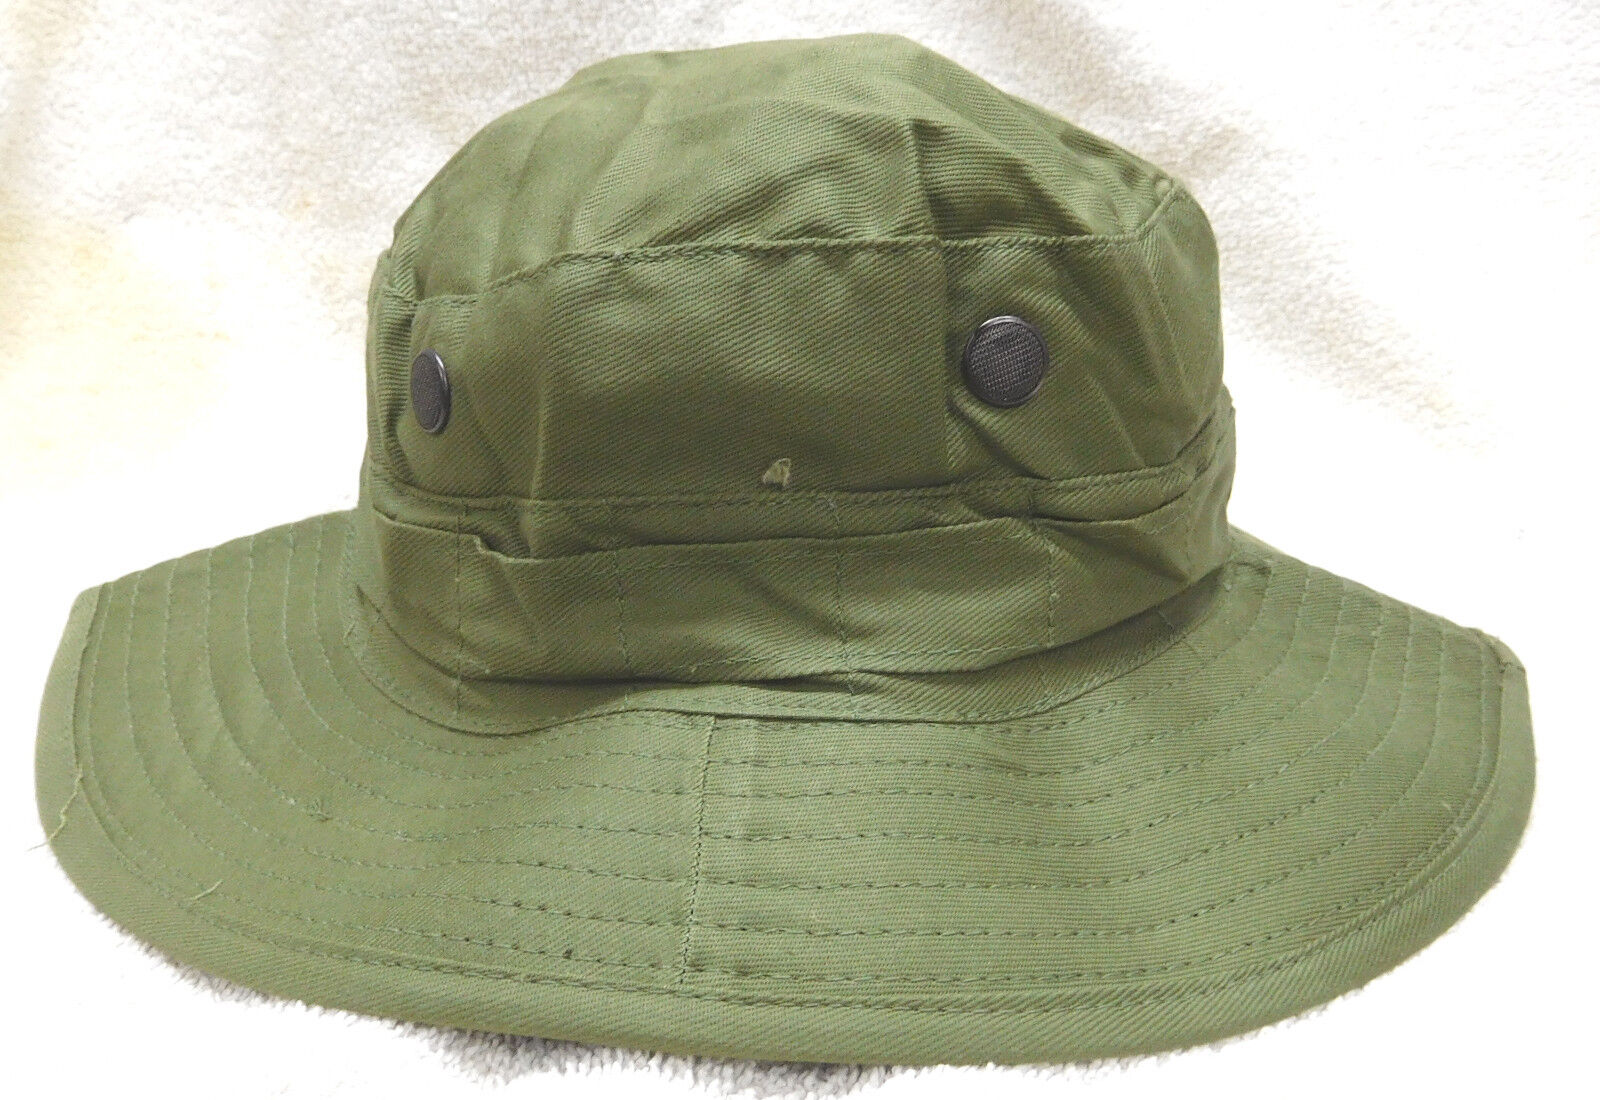 Genuine British Tropical Green Boonie Hat-New (J. Compton, Sons & Webb)